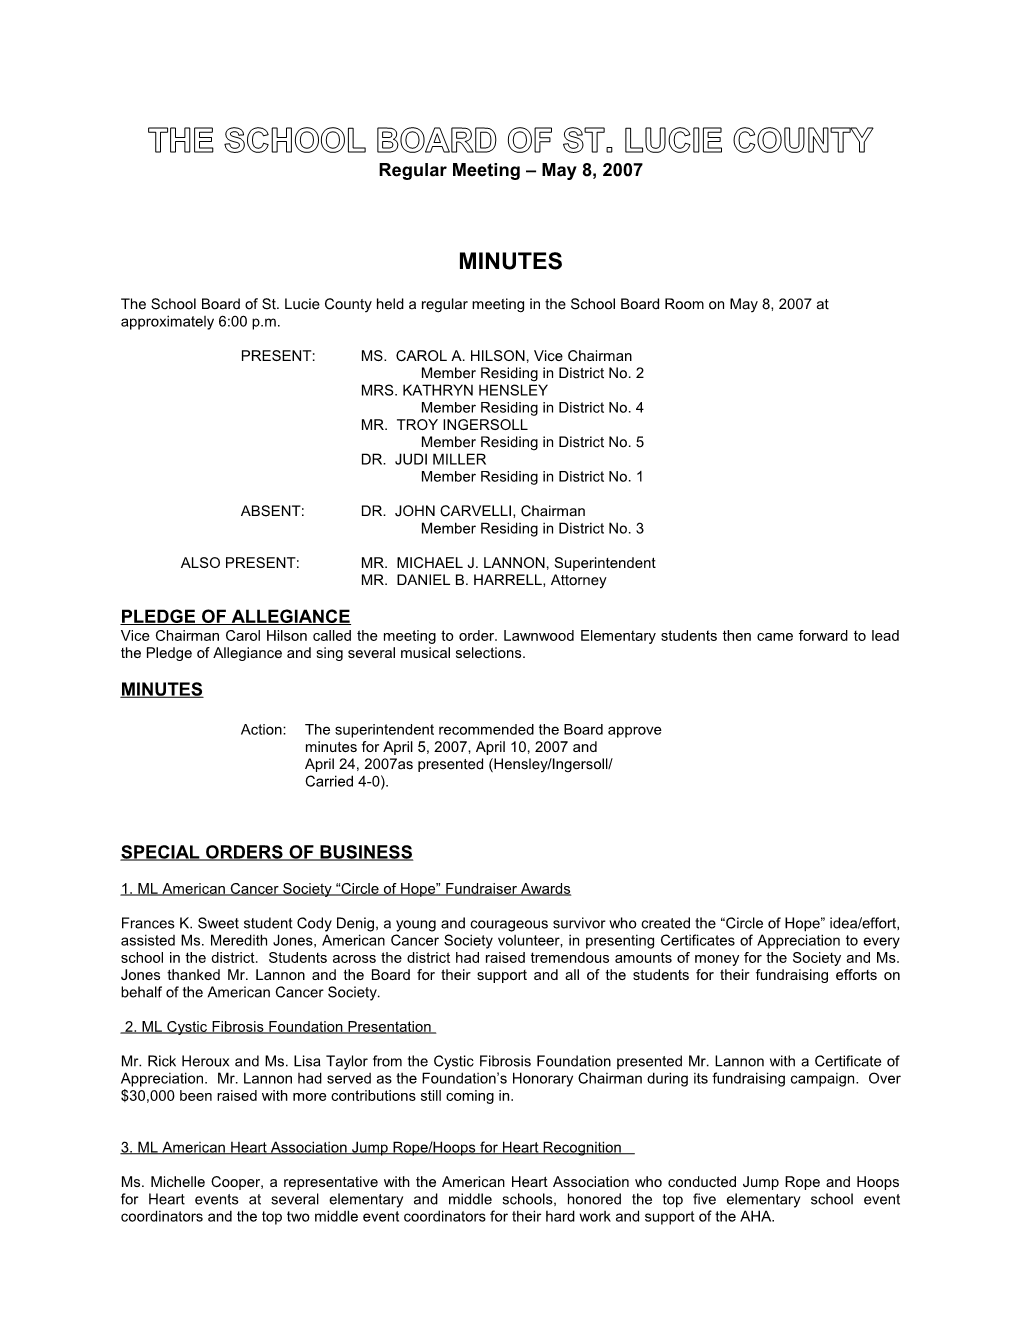 05-08-07 SLCSB Regular Meeting Minutes